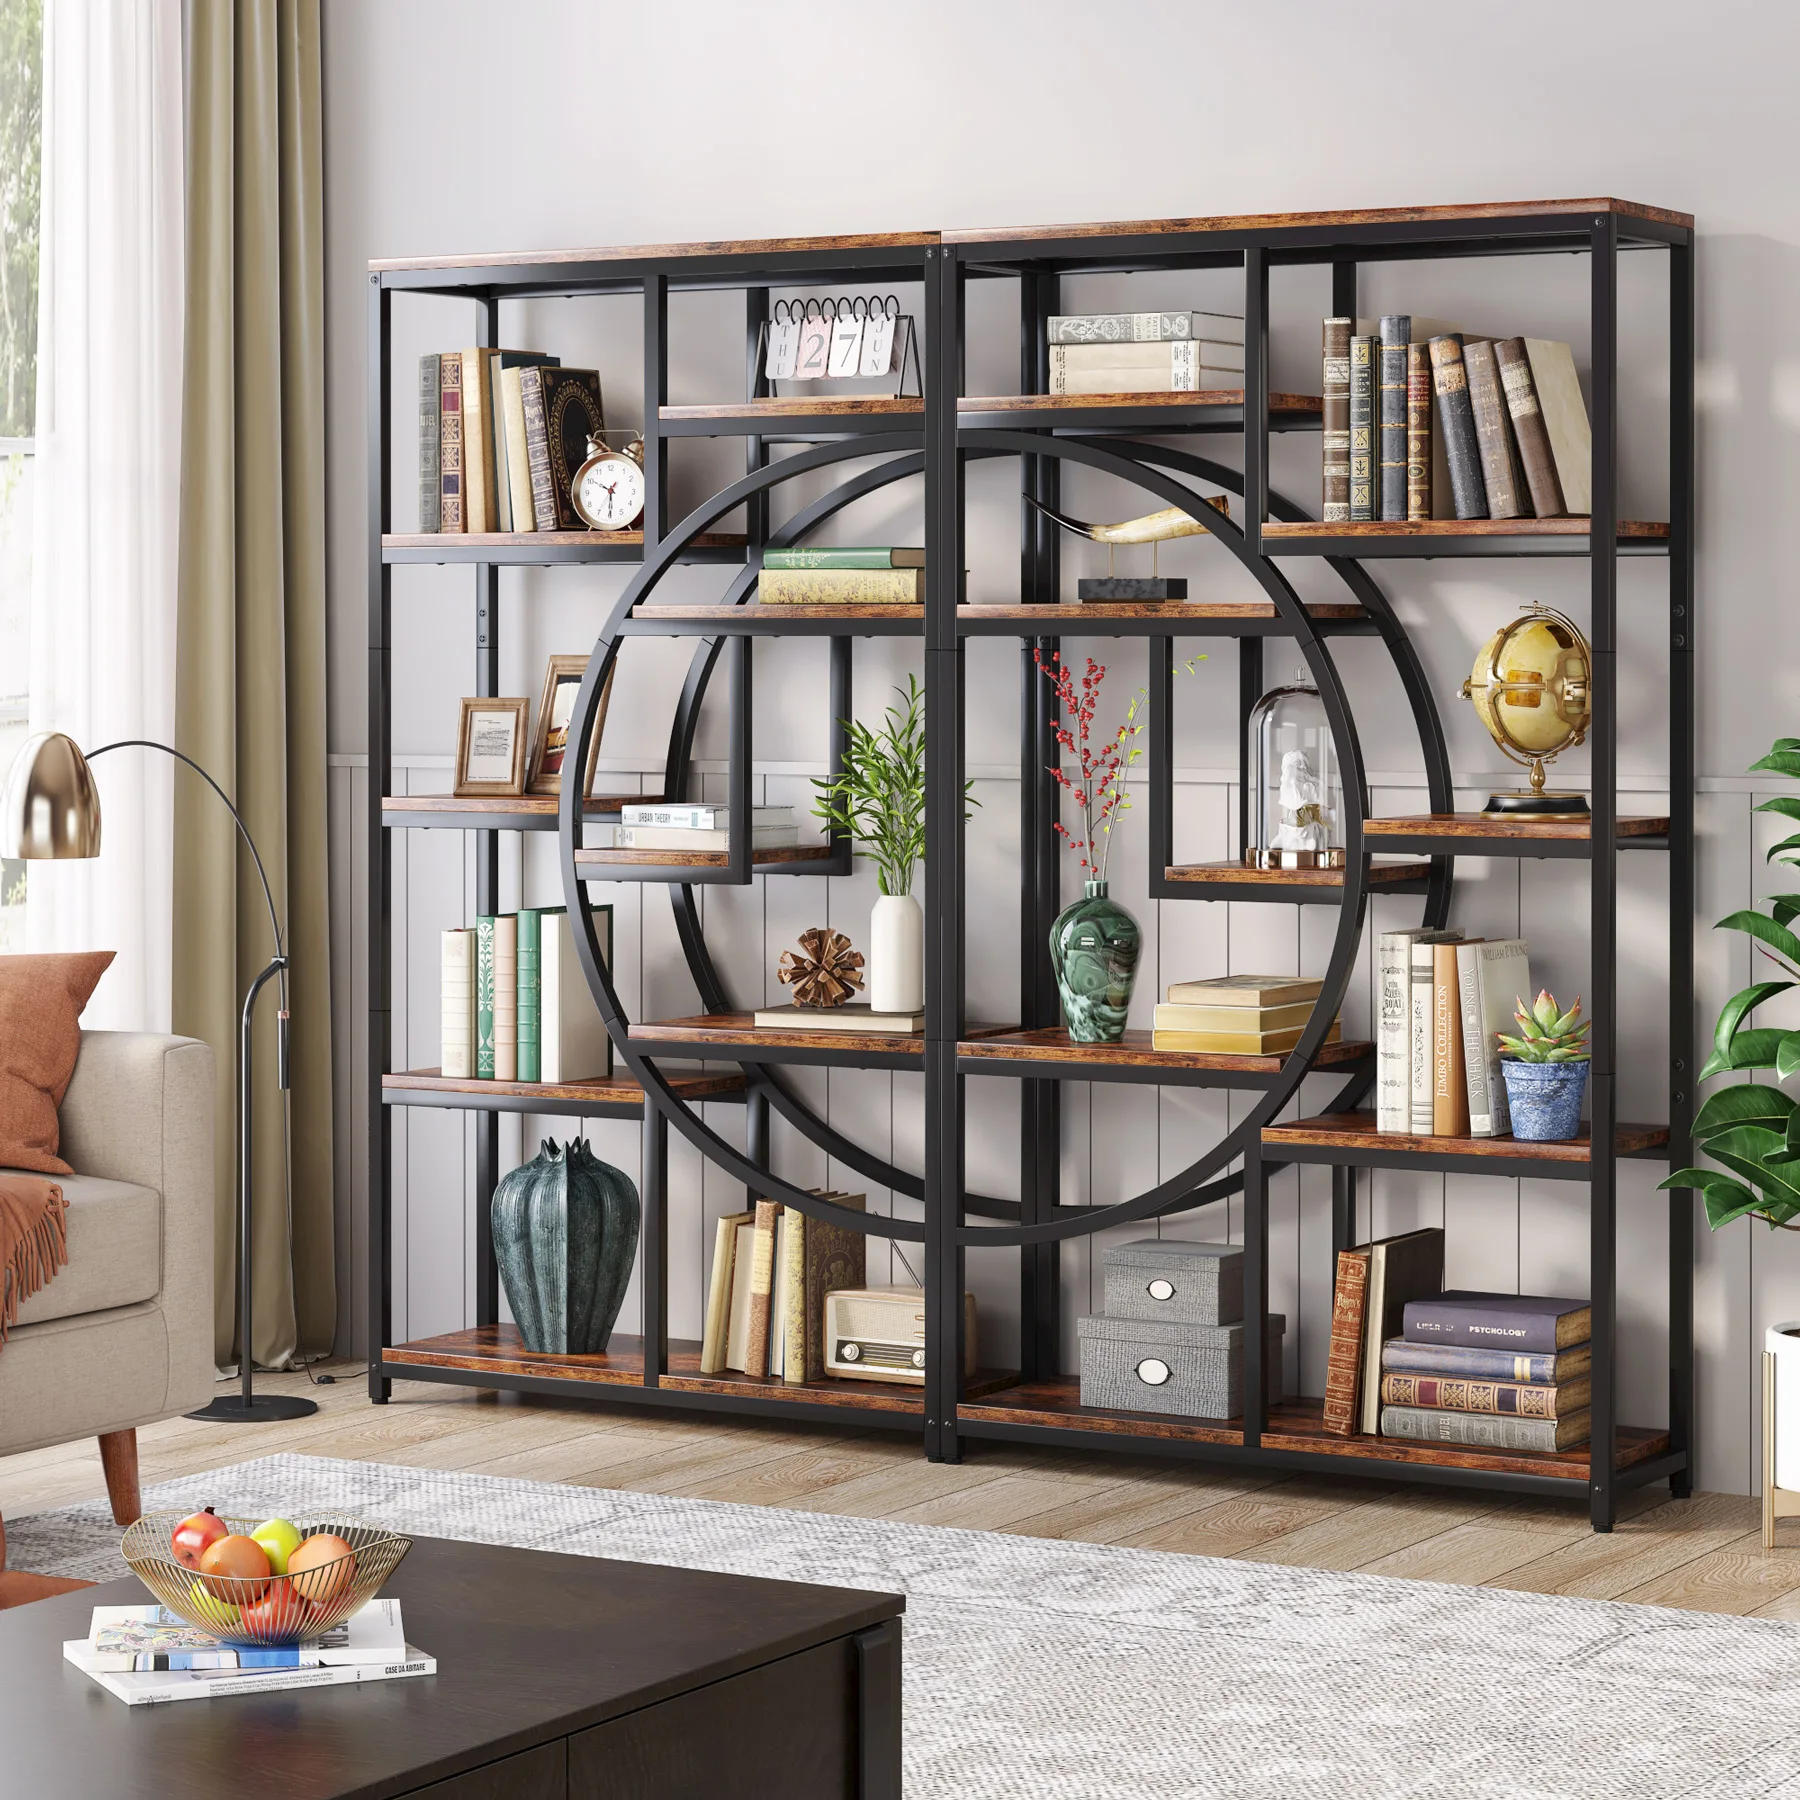 Tribesigns   display storage racks & shelving units for living room bedroom furniture